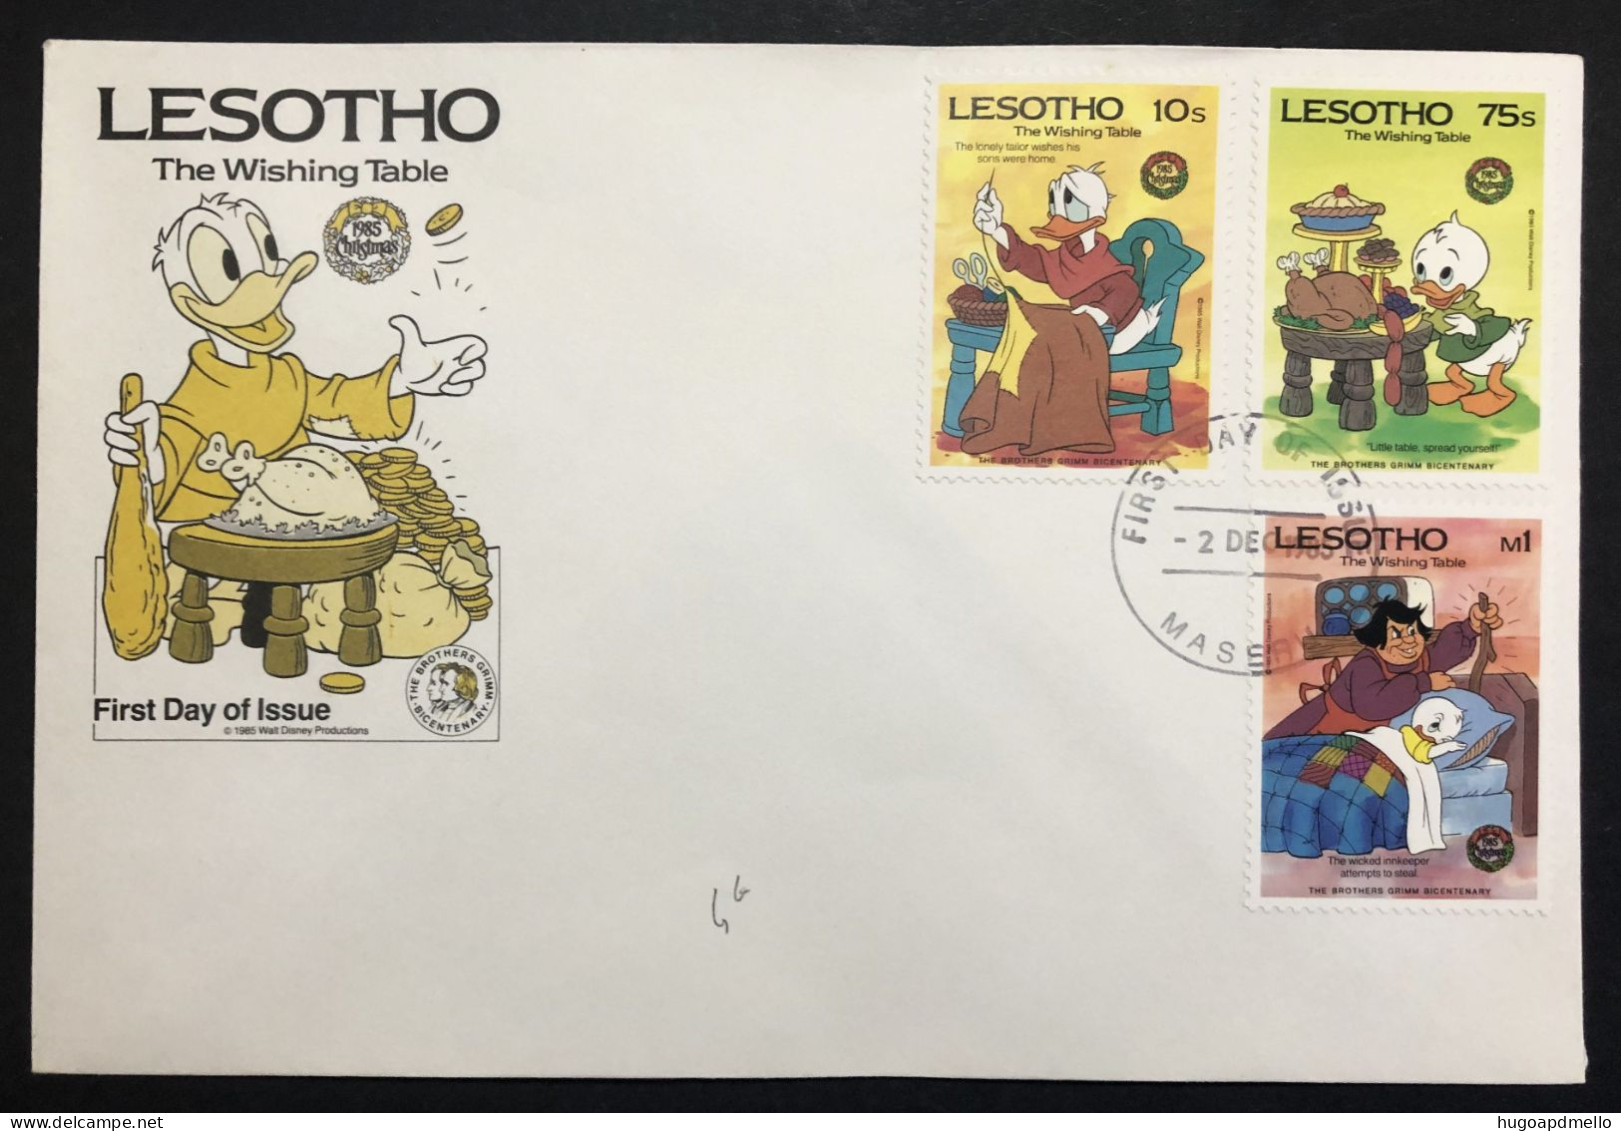 LESOTHO, Uncirculated FDC, « DISNEY », « THE WISHING TABLE », 1985 - Comics